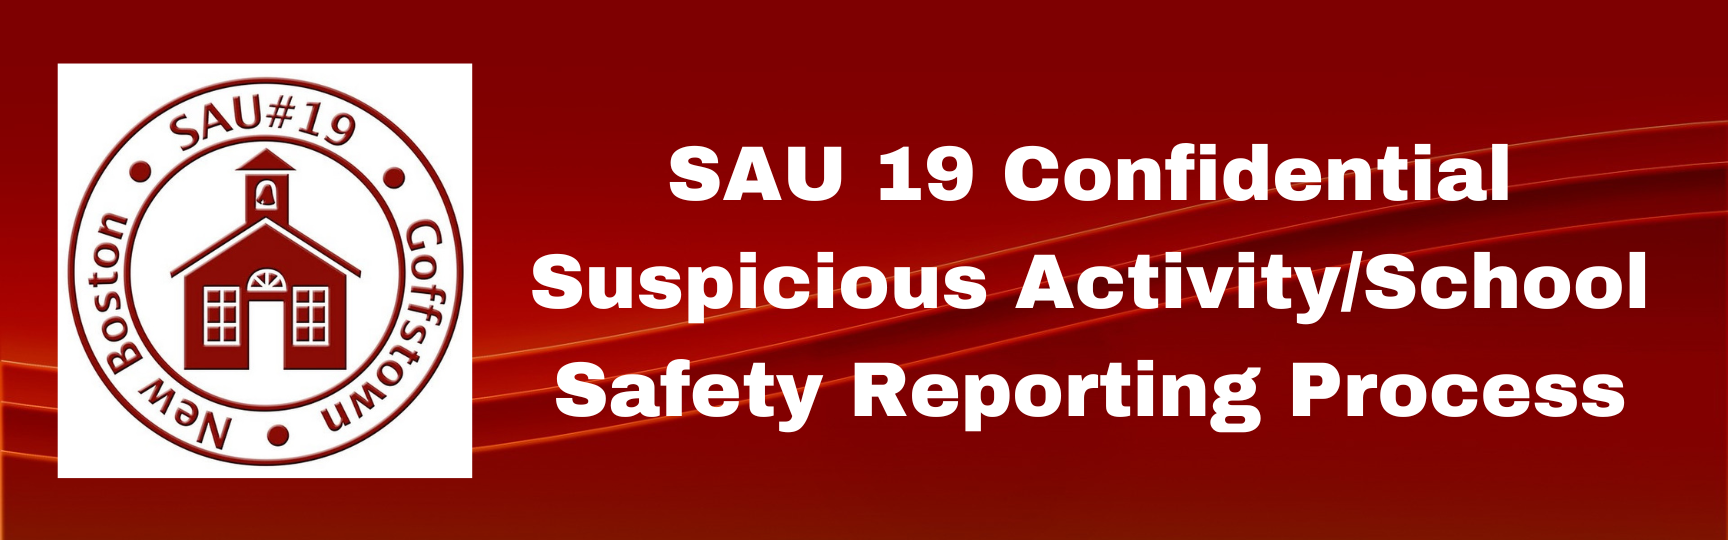 SAU 19 Confidential Suspicious/School Safety Reporting Process